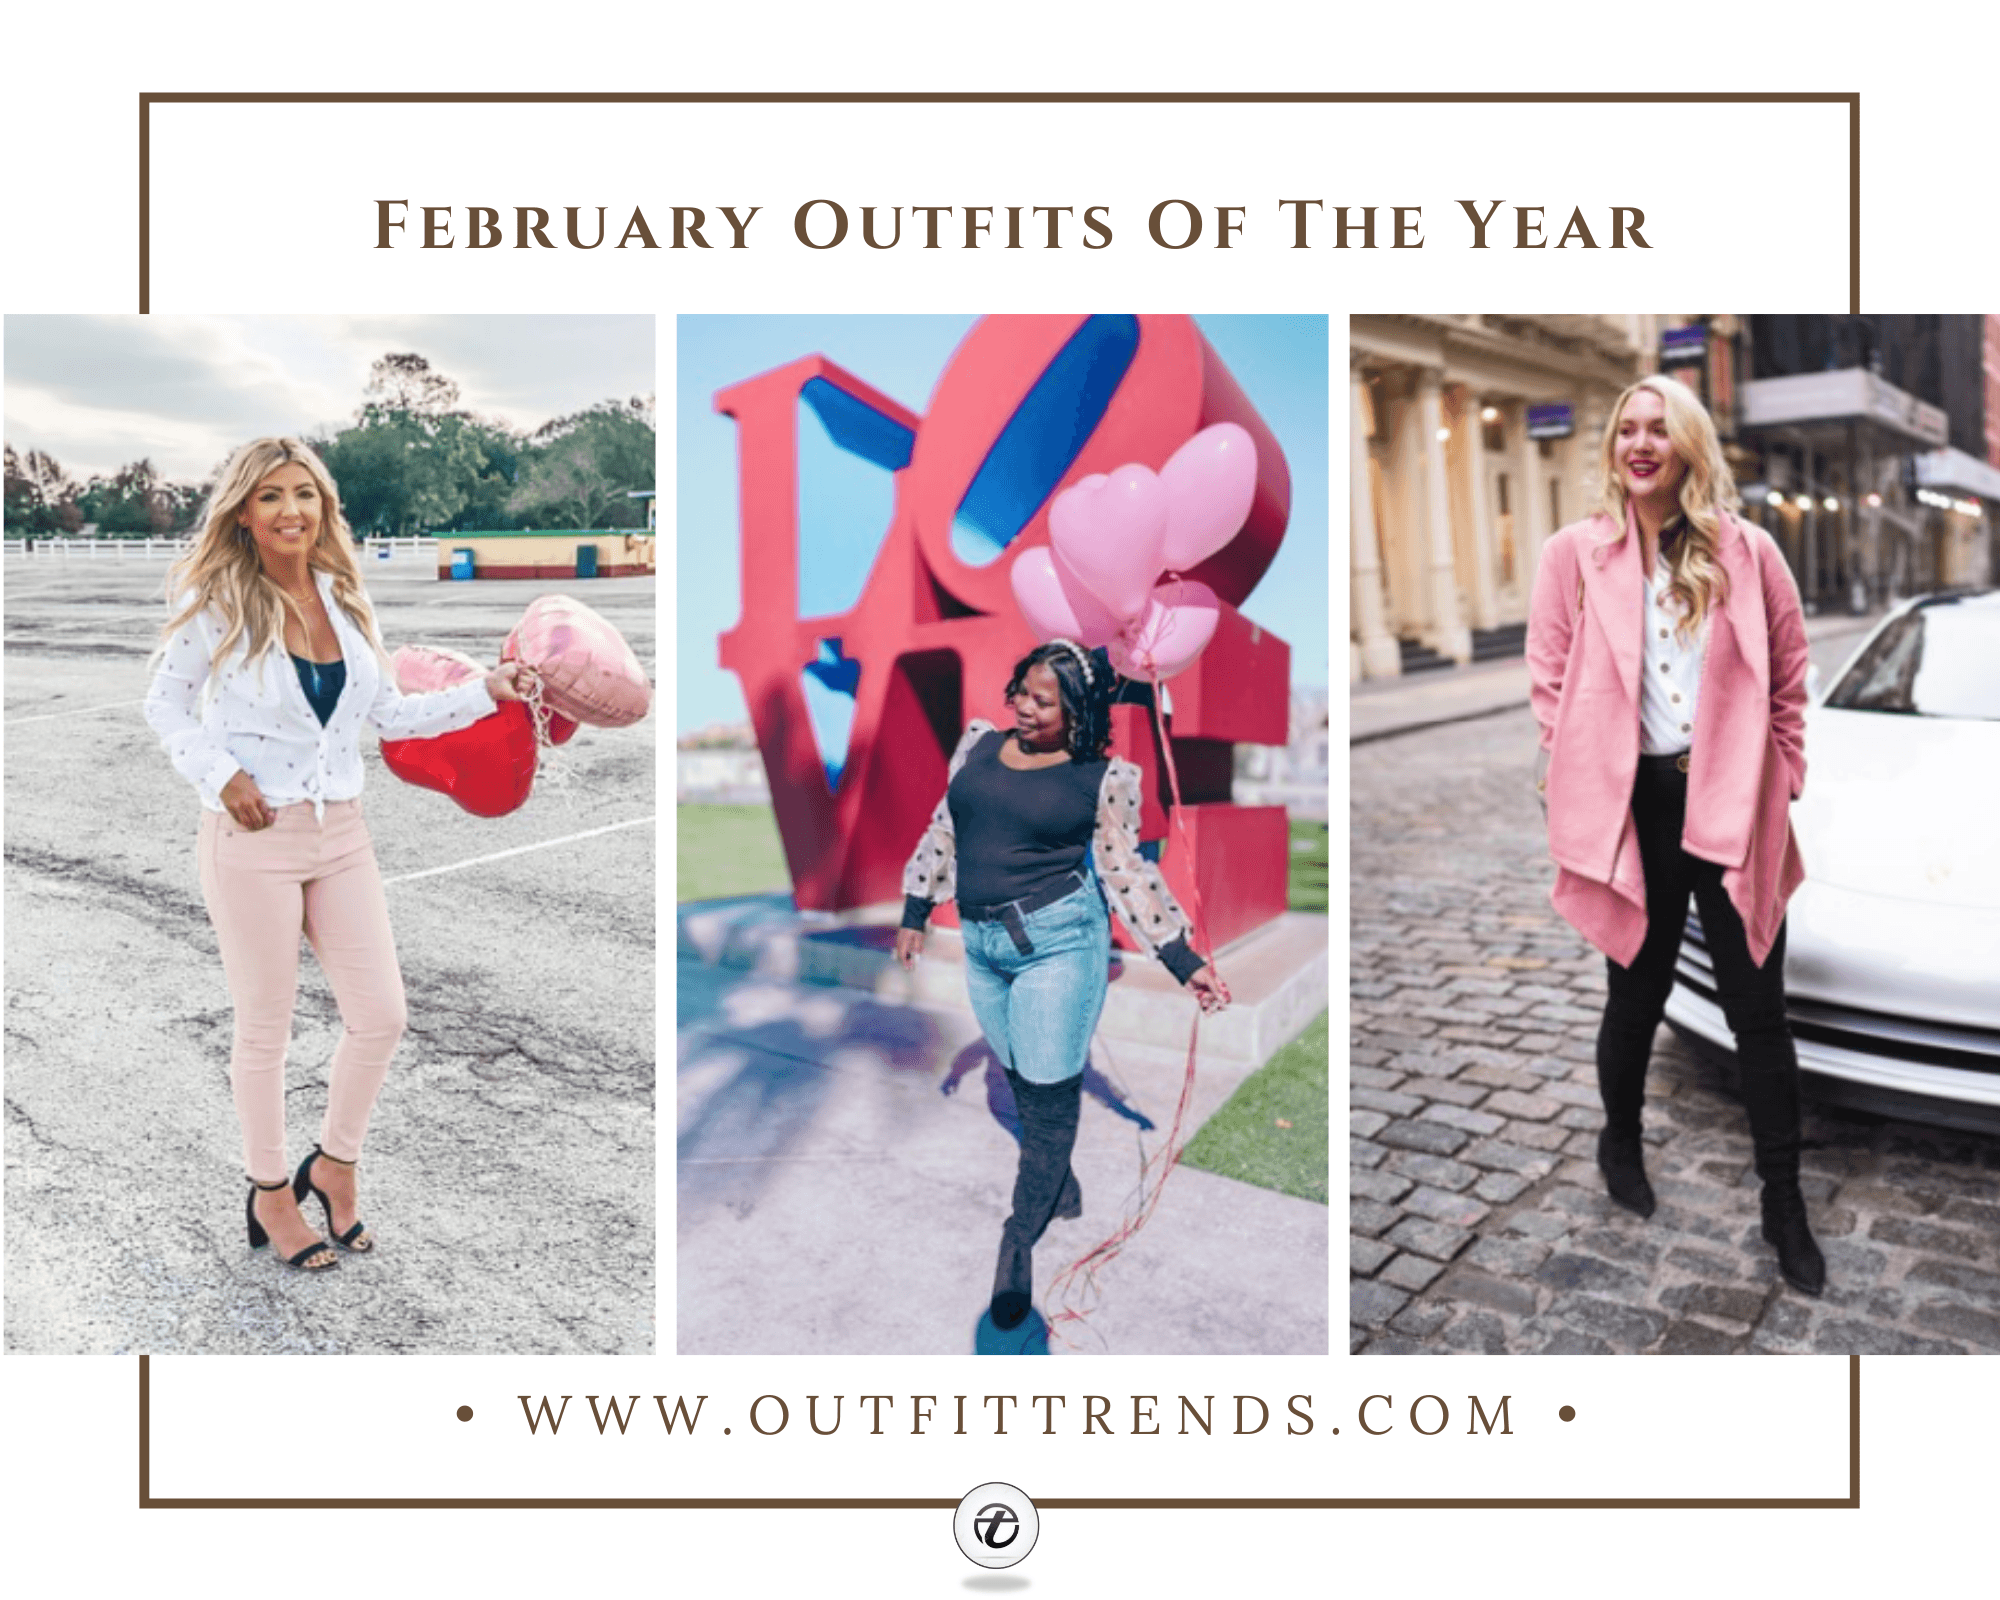 February Outfit Ideas 2020 - StyledJen